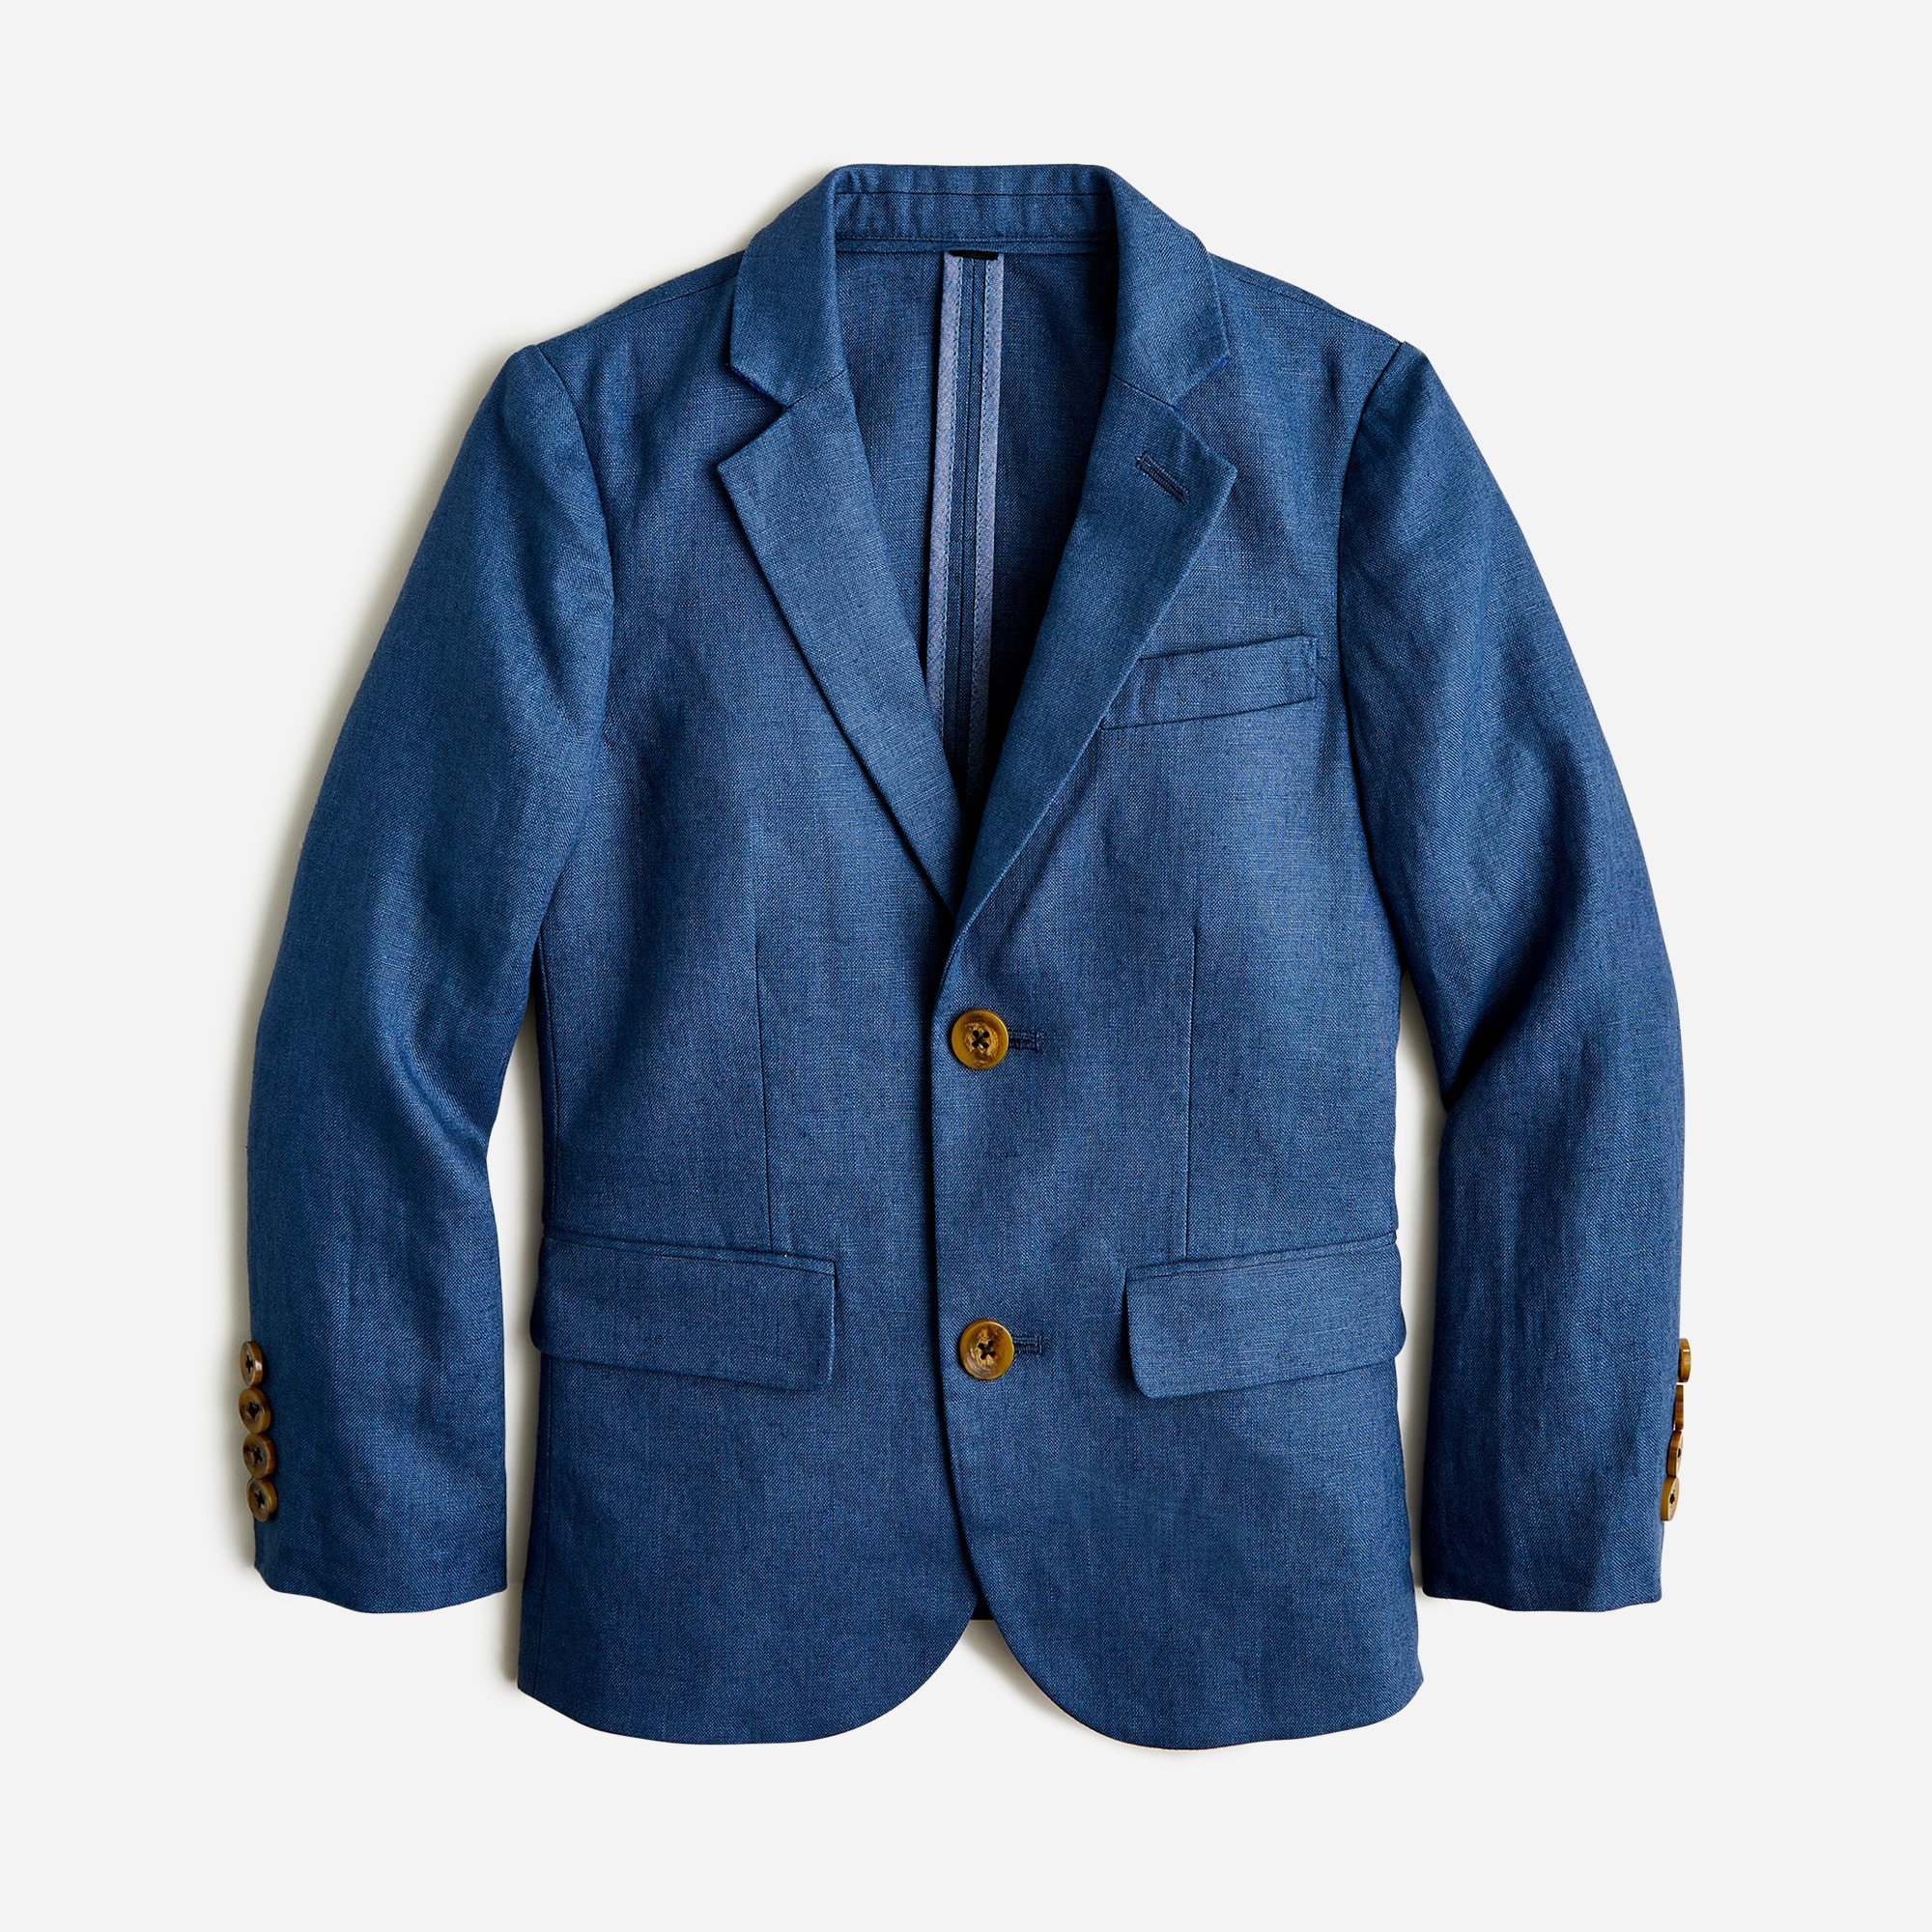  Boys' Ludlow unstructured suit jacket in linen